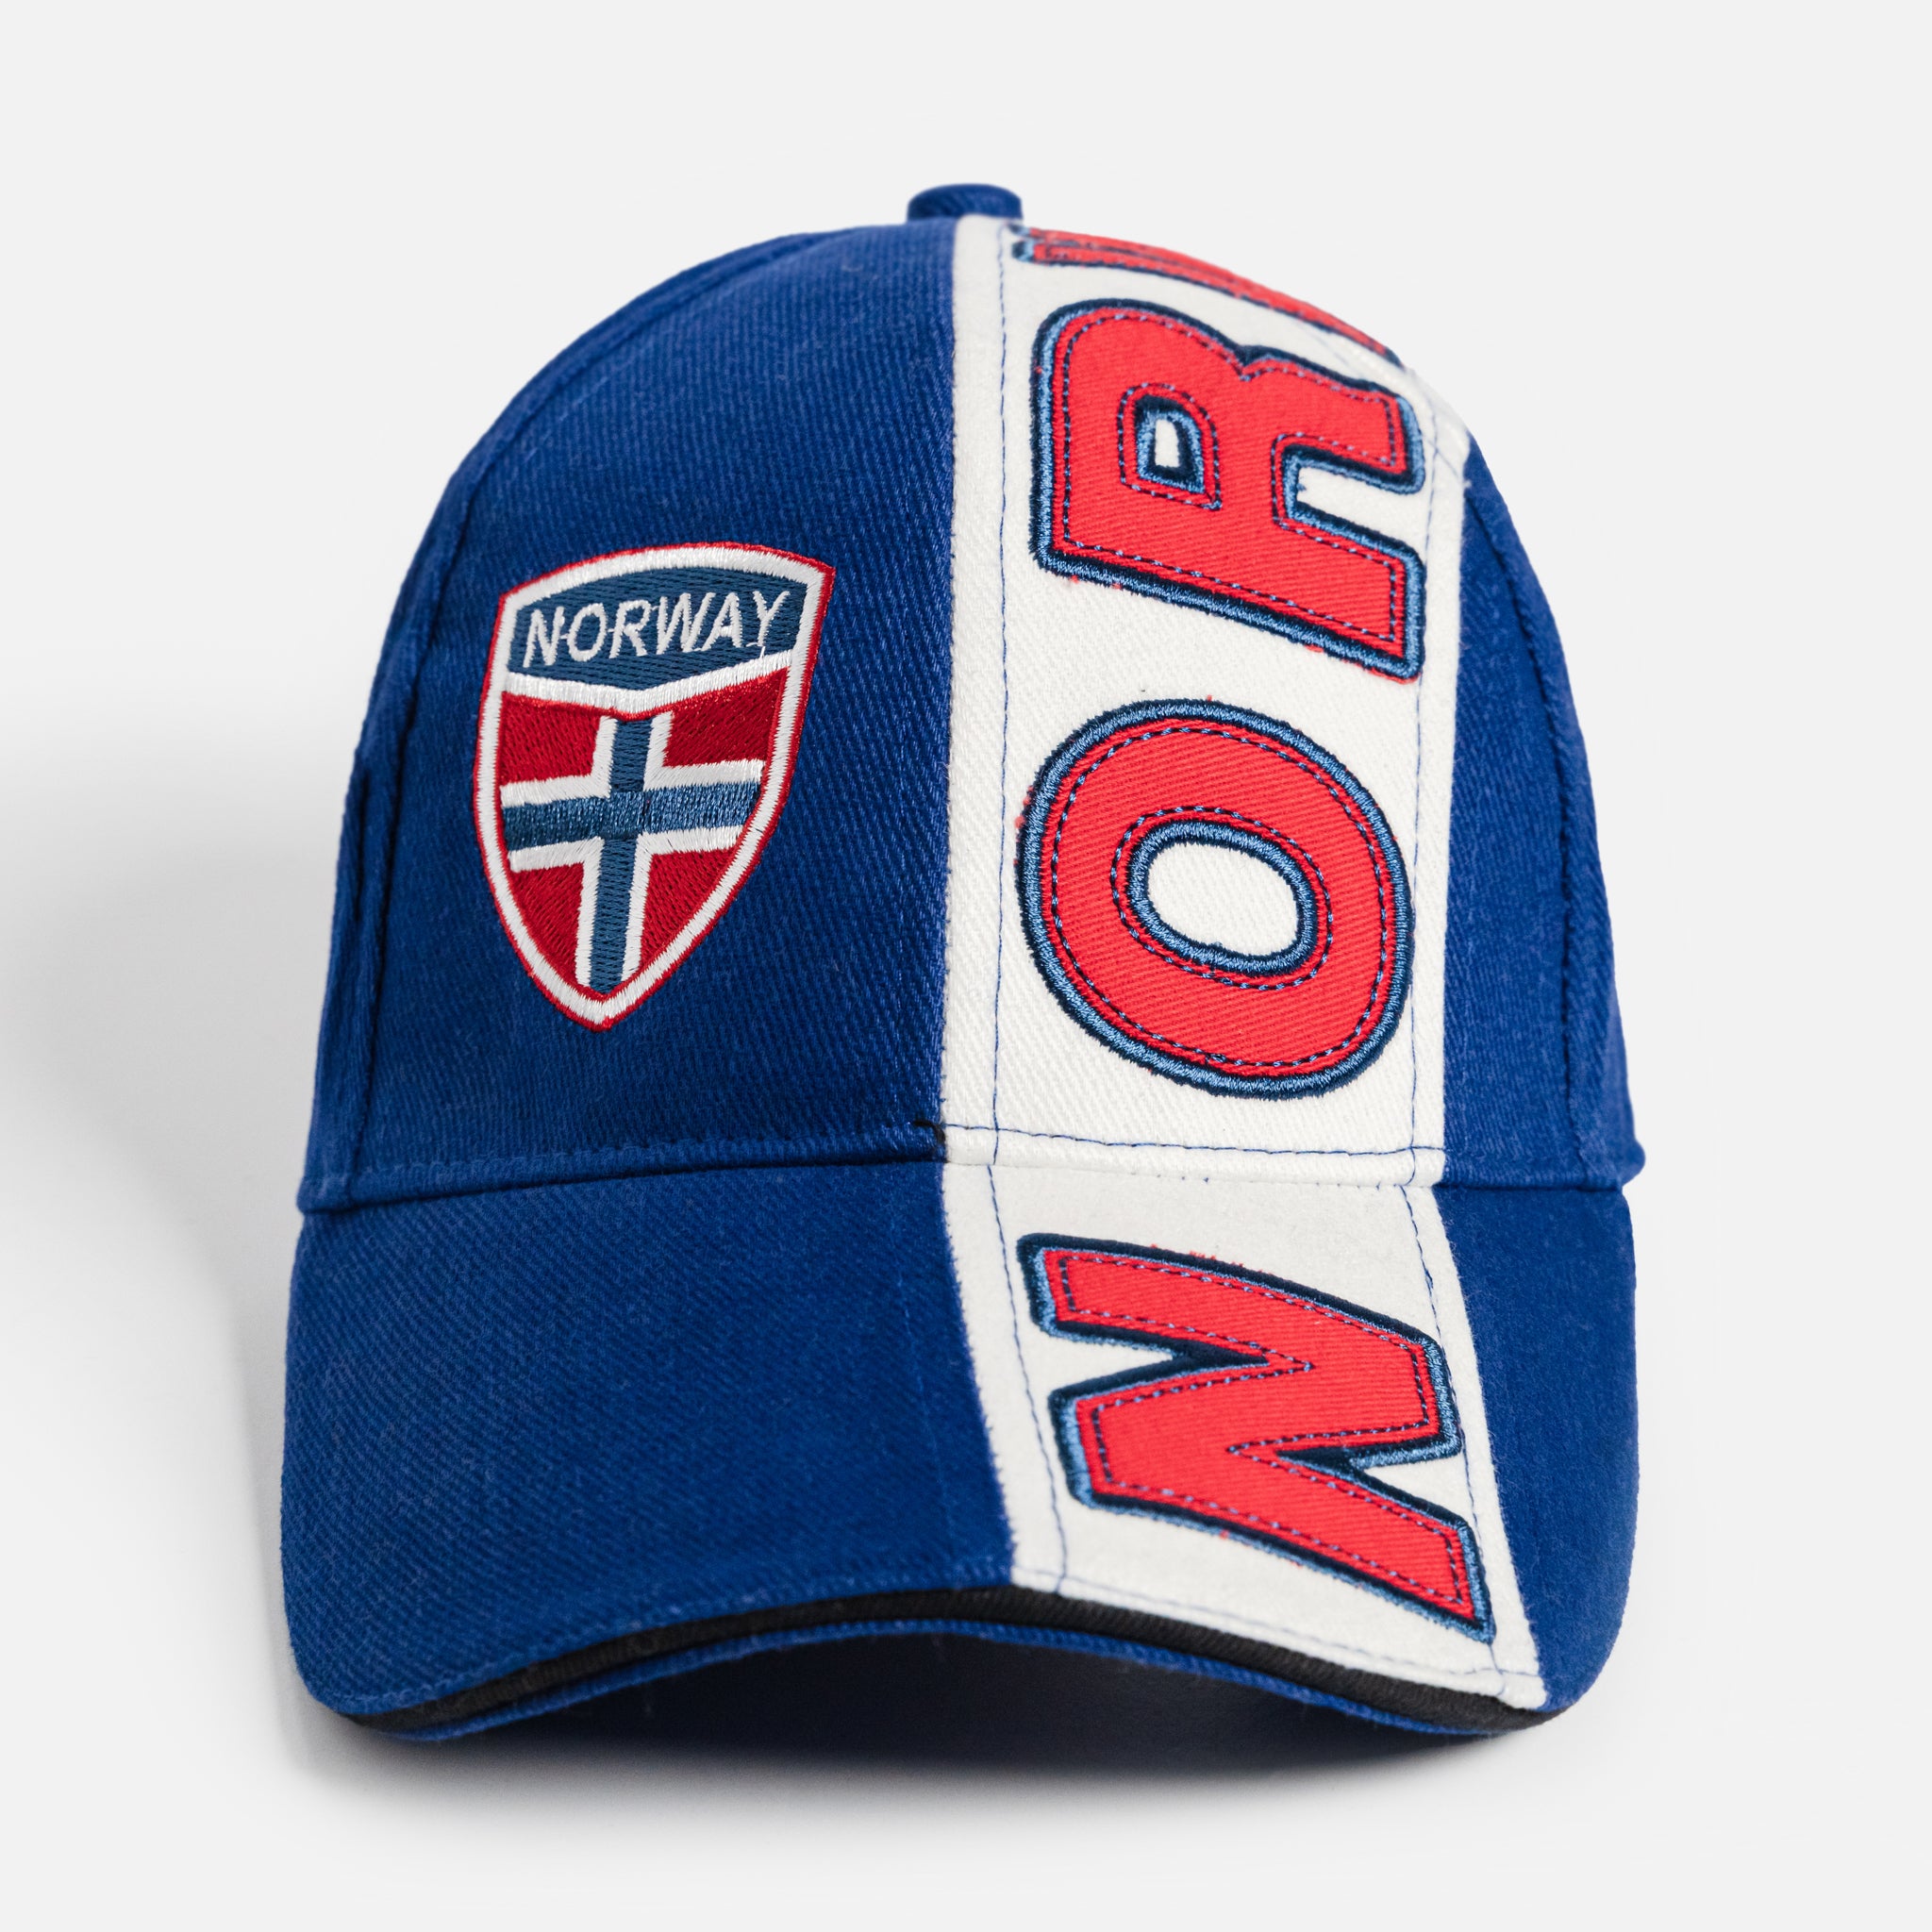 Norway Shield Cap by Rokk